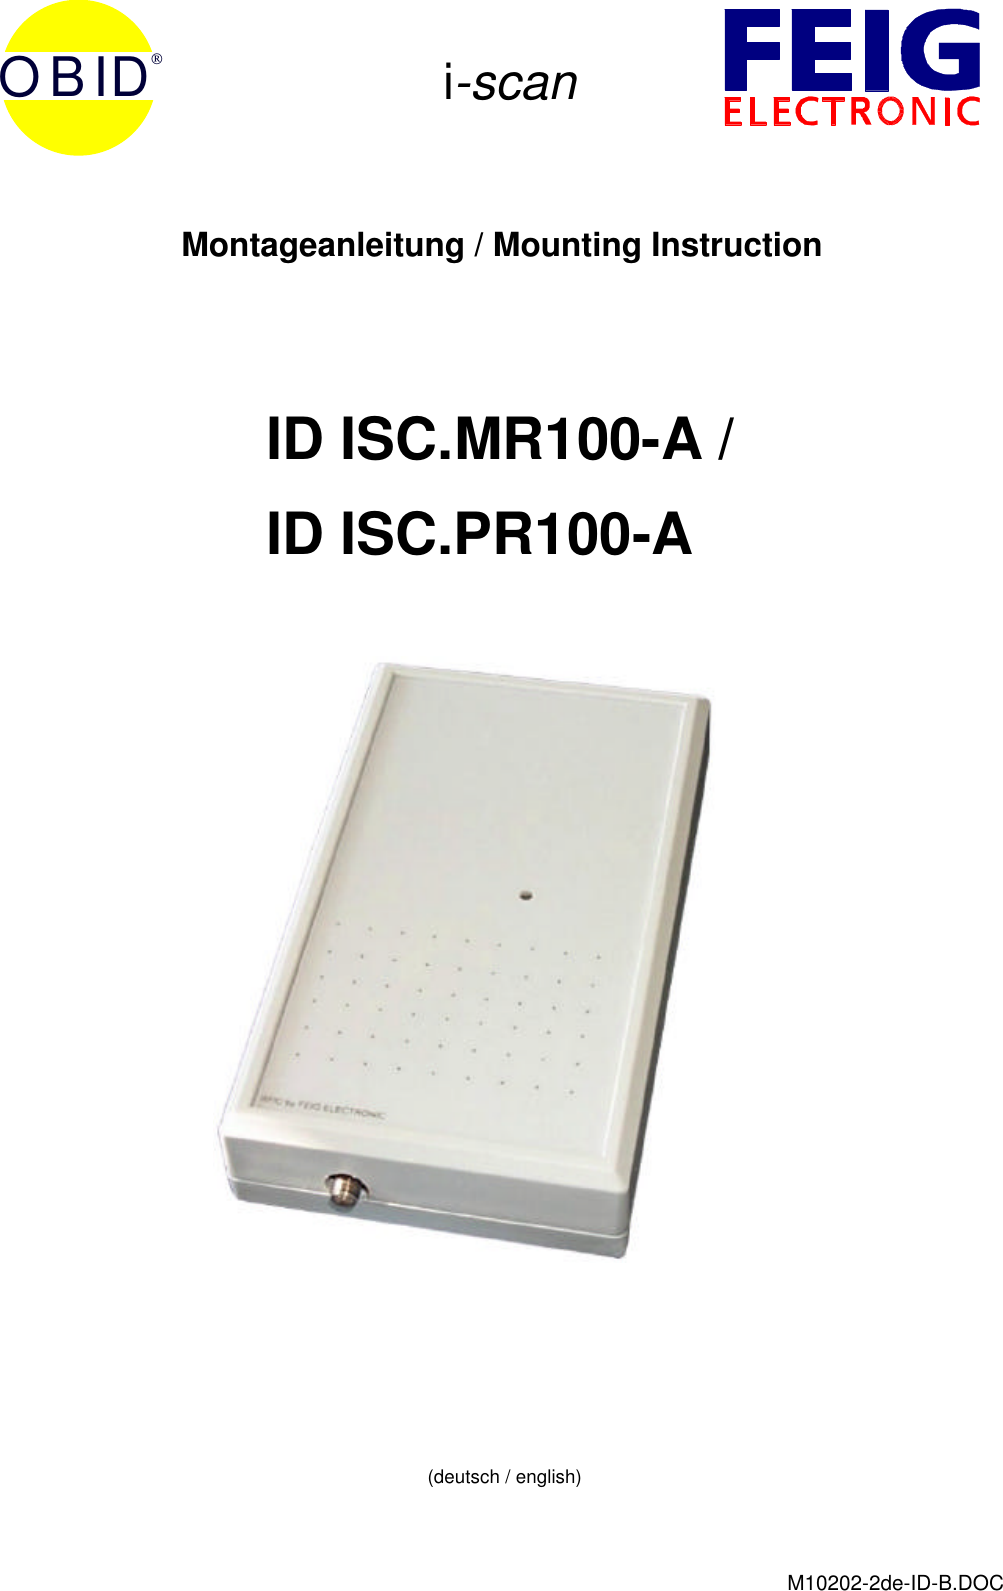 i-scanM10202-2de-ID-B.DOCOBIDMontageanleitung / Mounting InstructionID ISC.MR100-A /ID ISC.PR100-A(deutsch / english)